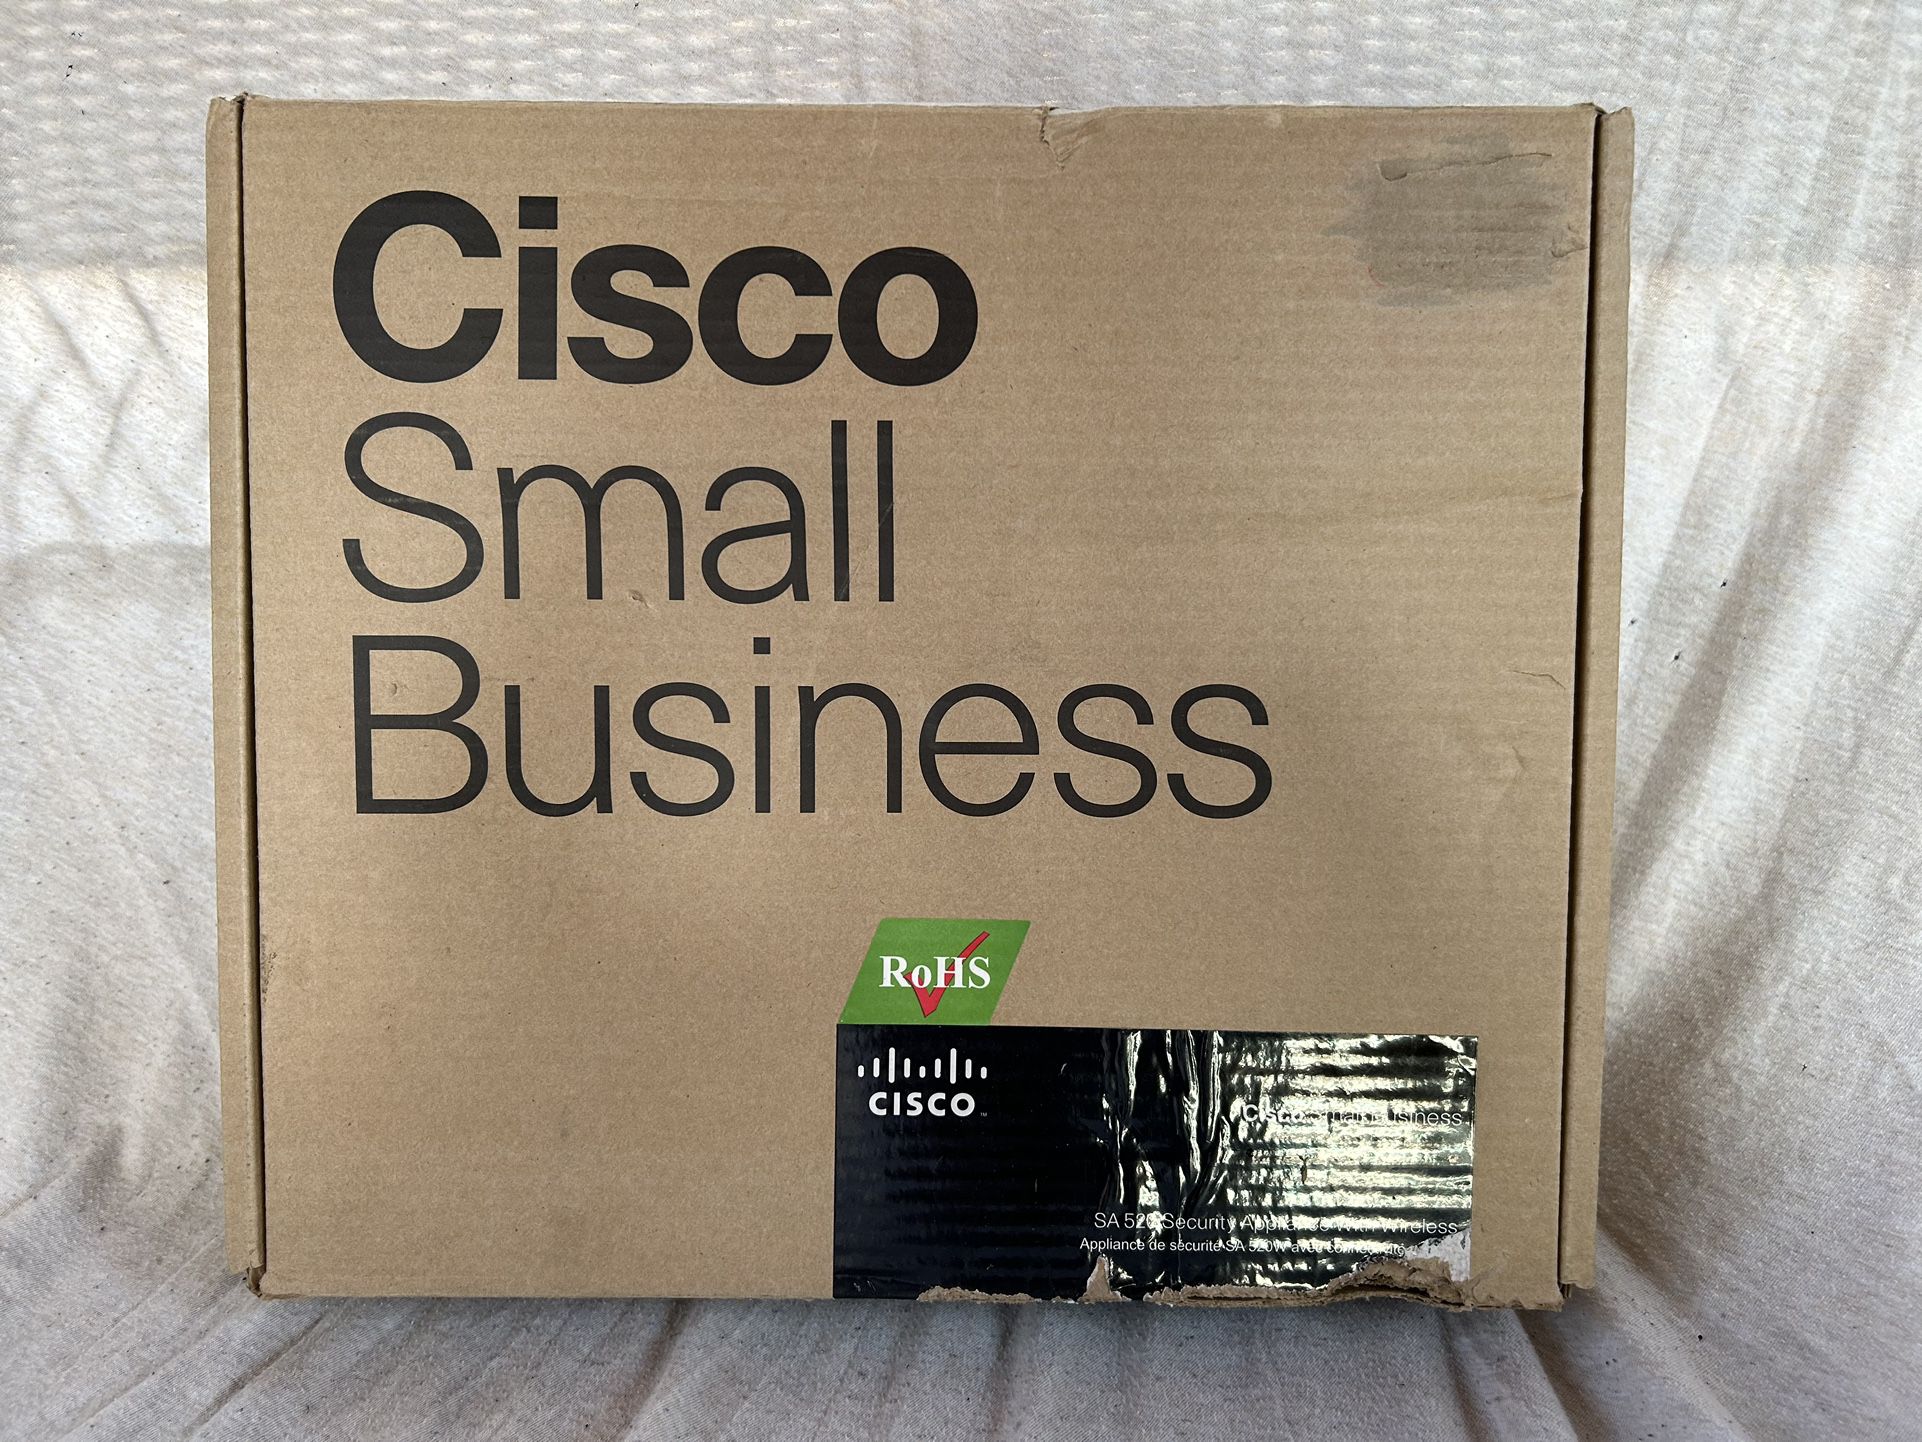 Cisco Small Business SA520-K9 Security Appliance